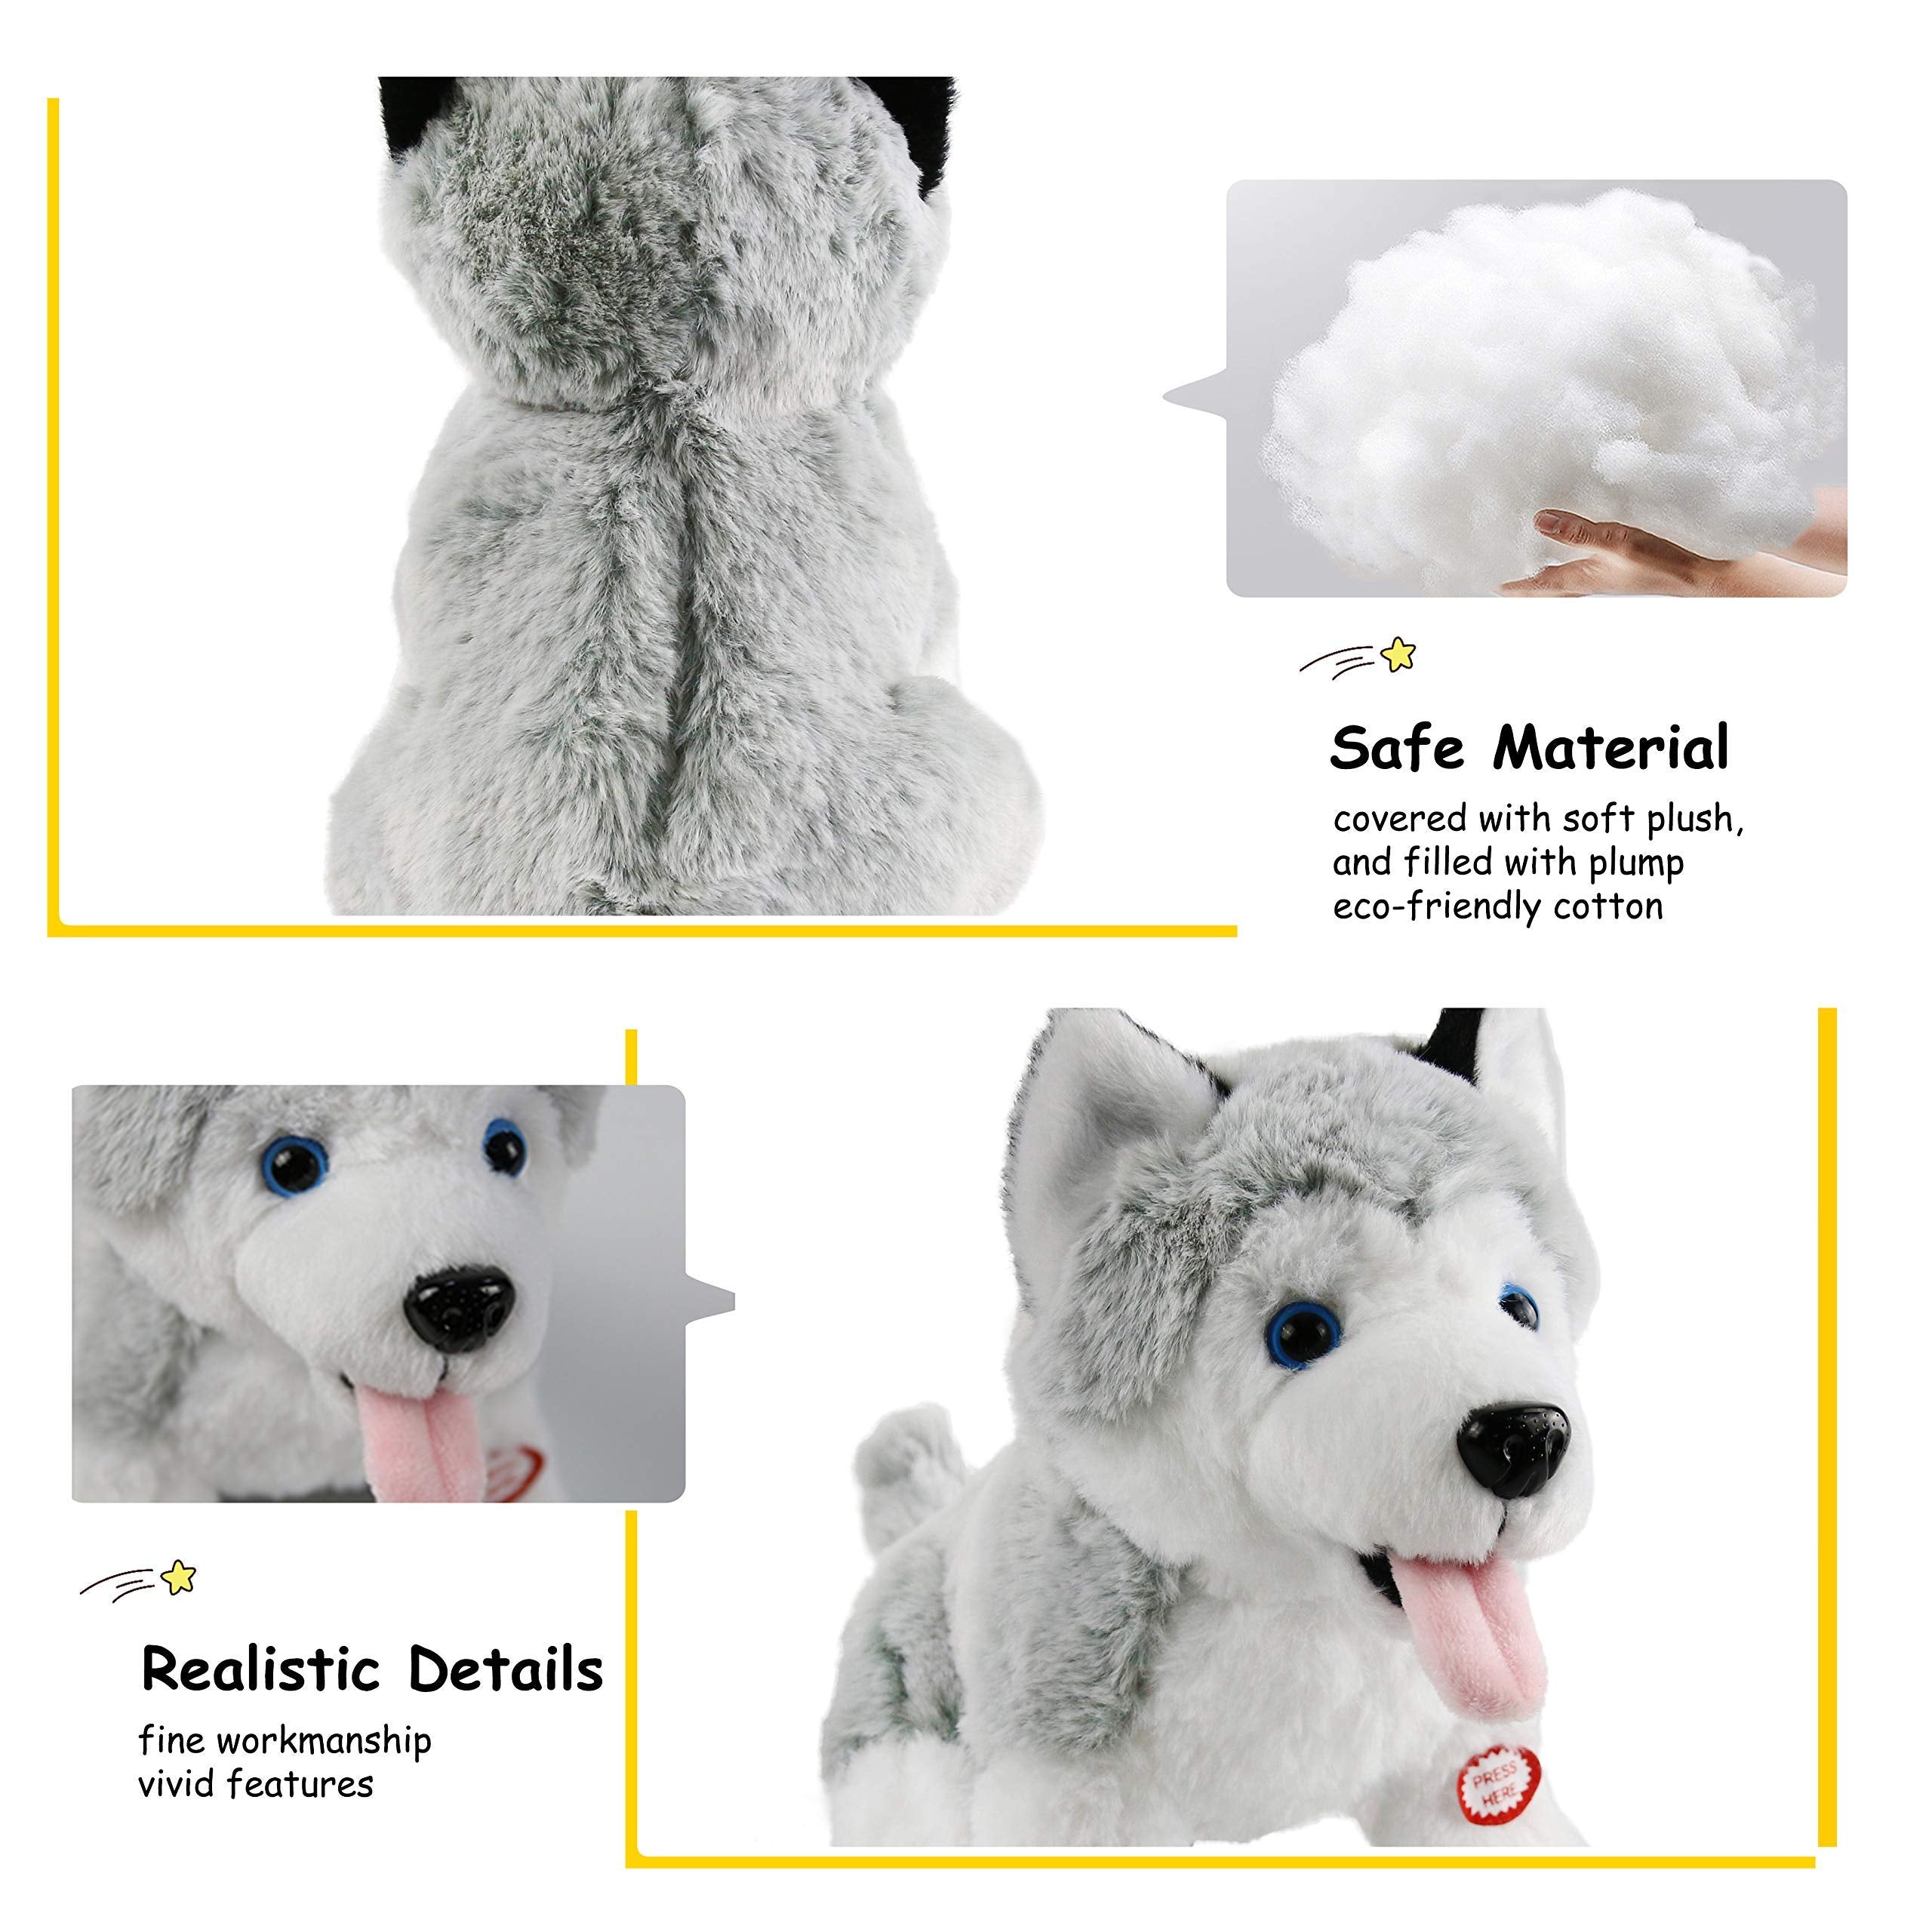 Athoinsu Light up Stuffed Husky Puppy Dog Soft Plush Toy with Magic Lights, 8'' - Glow Guards